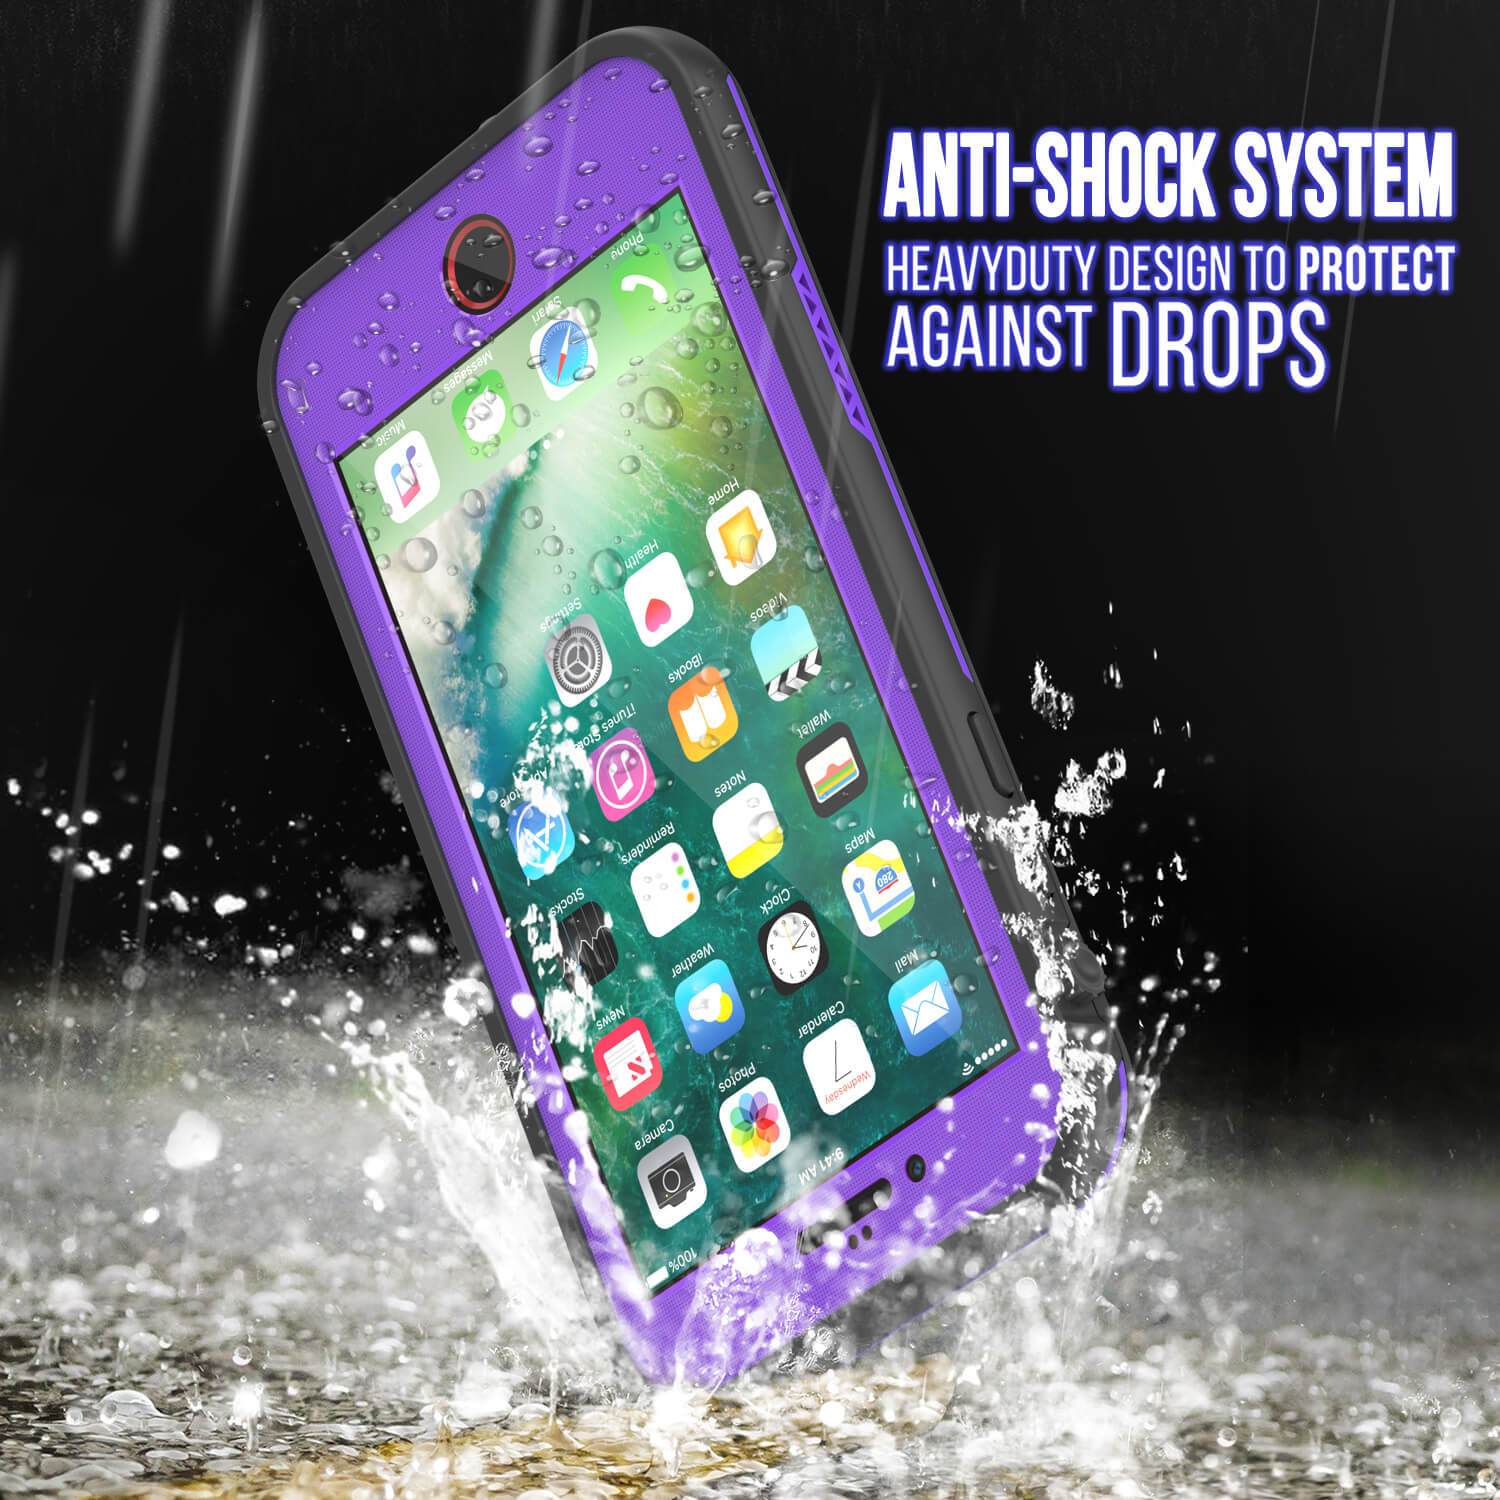 iPhone 7+ Plus Waterproof Case, Punkcase SpikeStar Purple Series | Thin Fit 6.6ft Underwater IP68